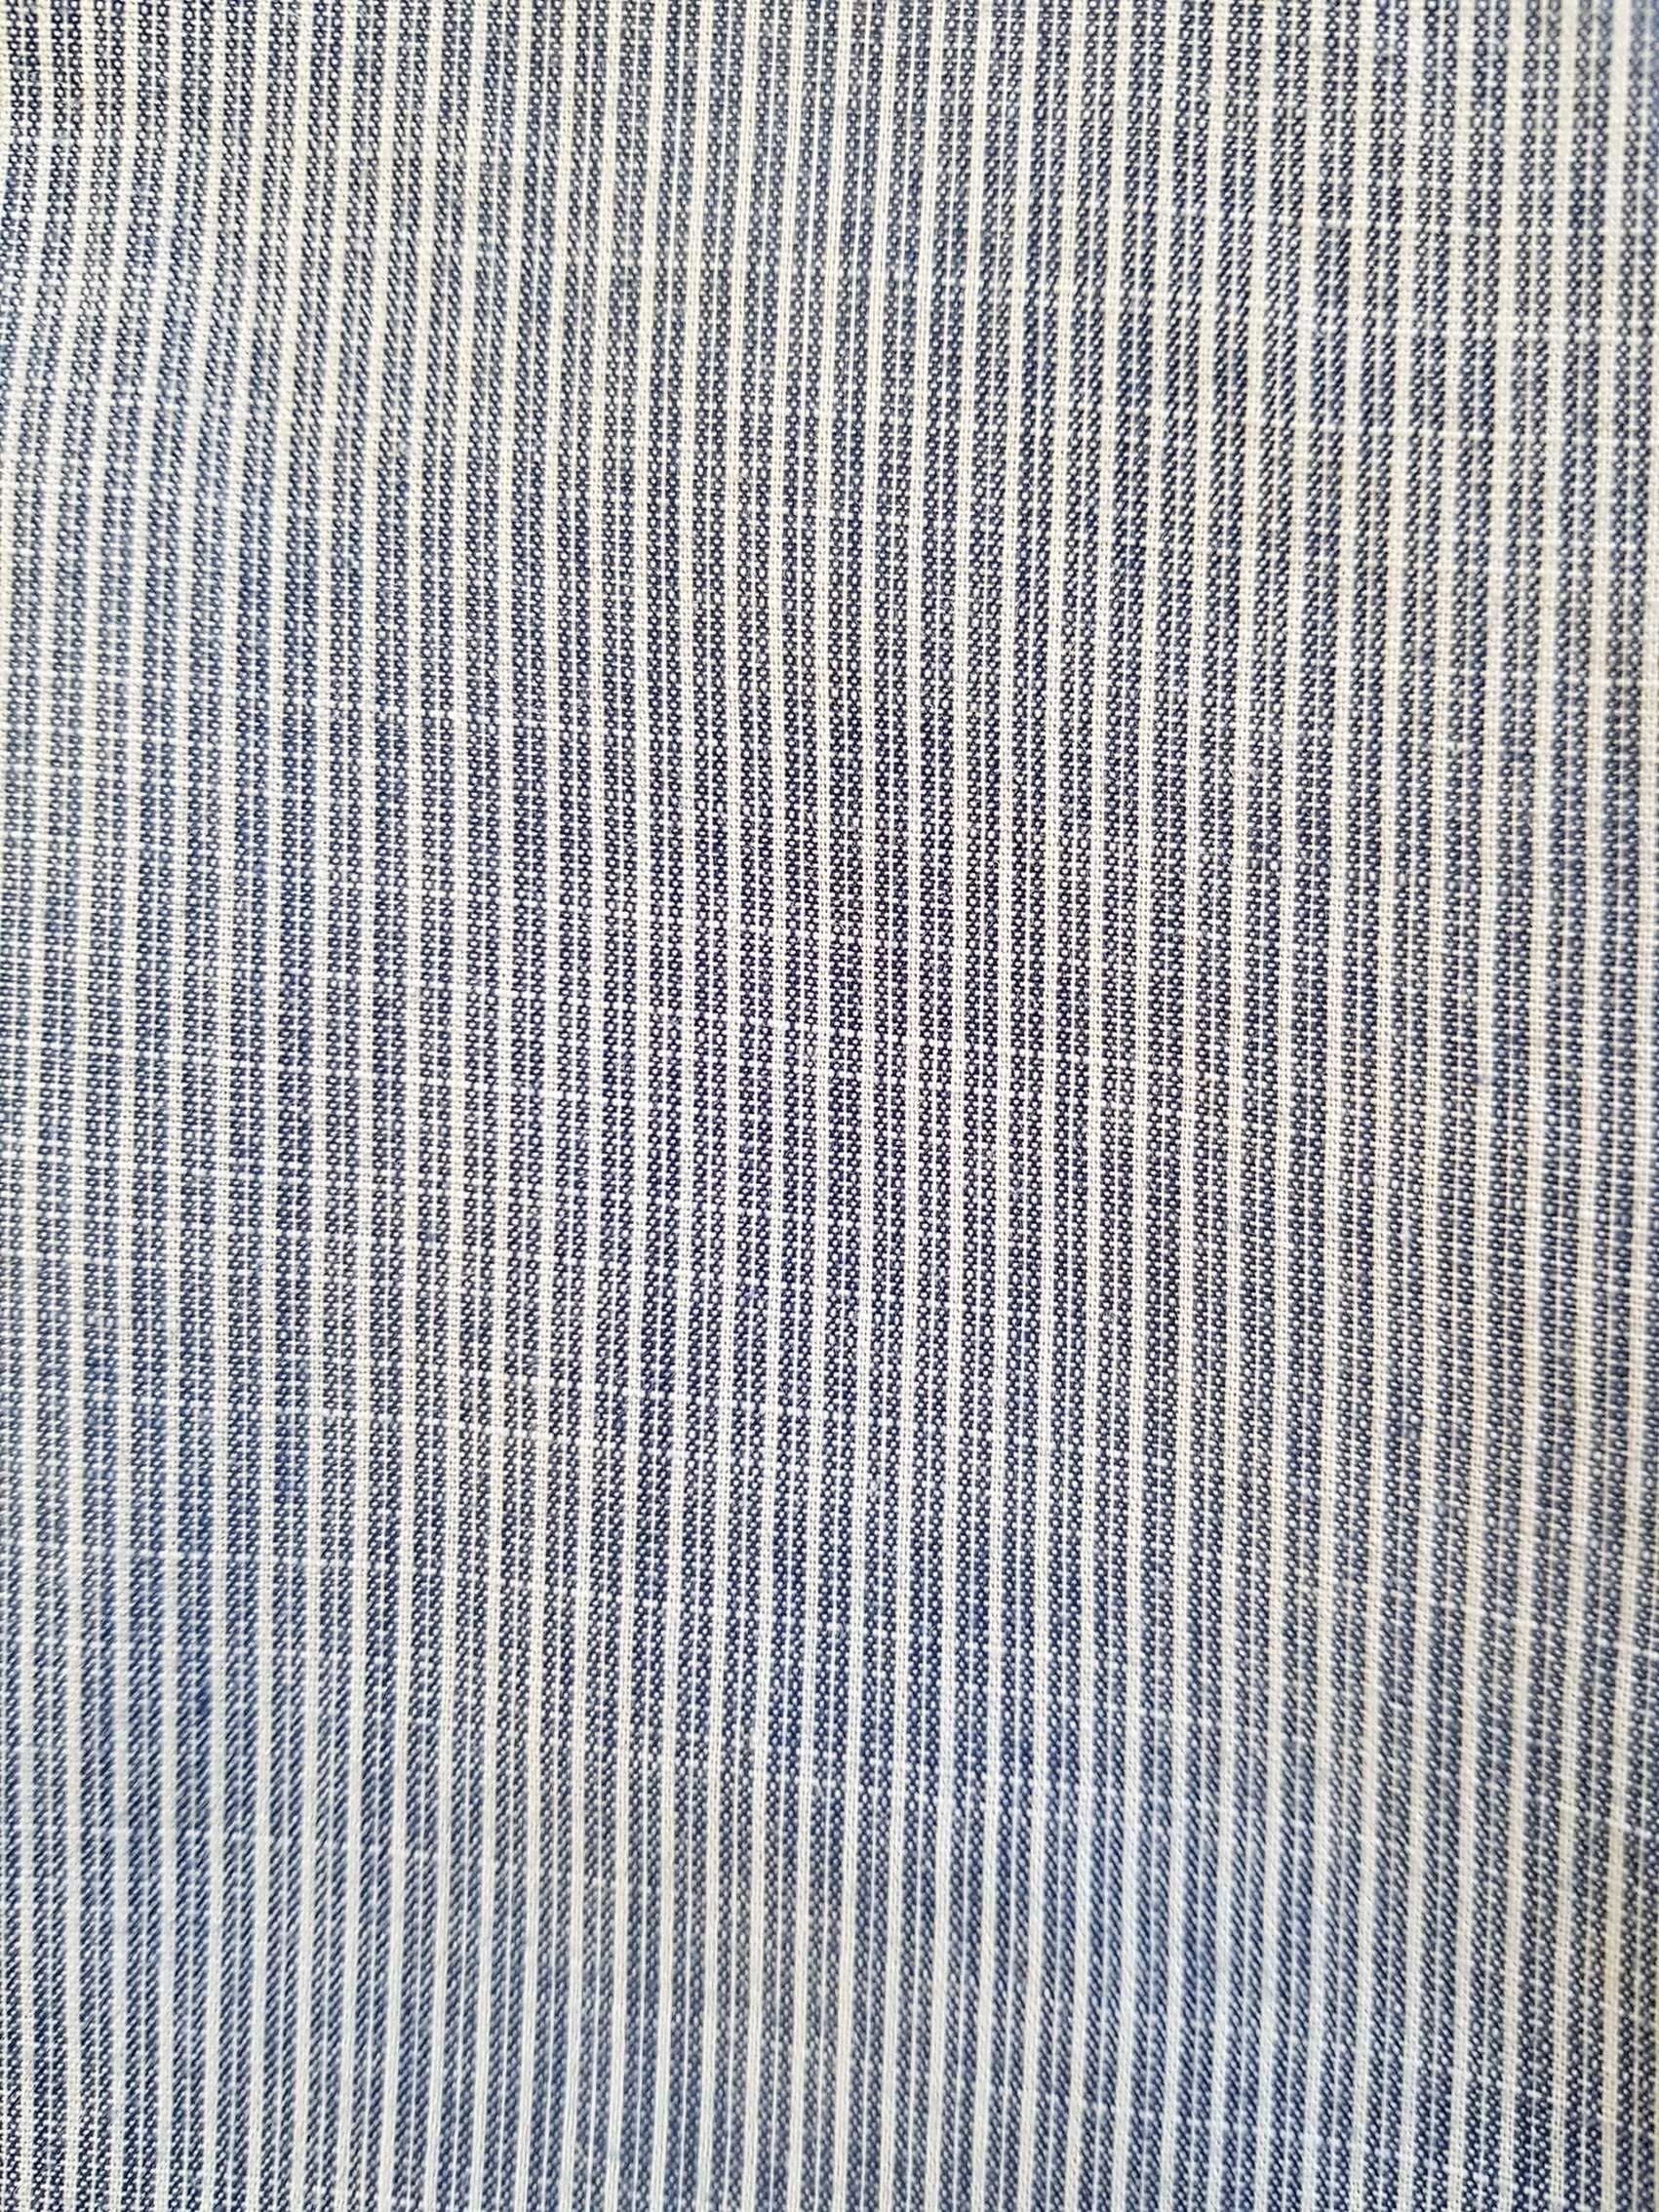 Koszula męska L, biało-niebieska